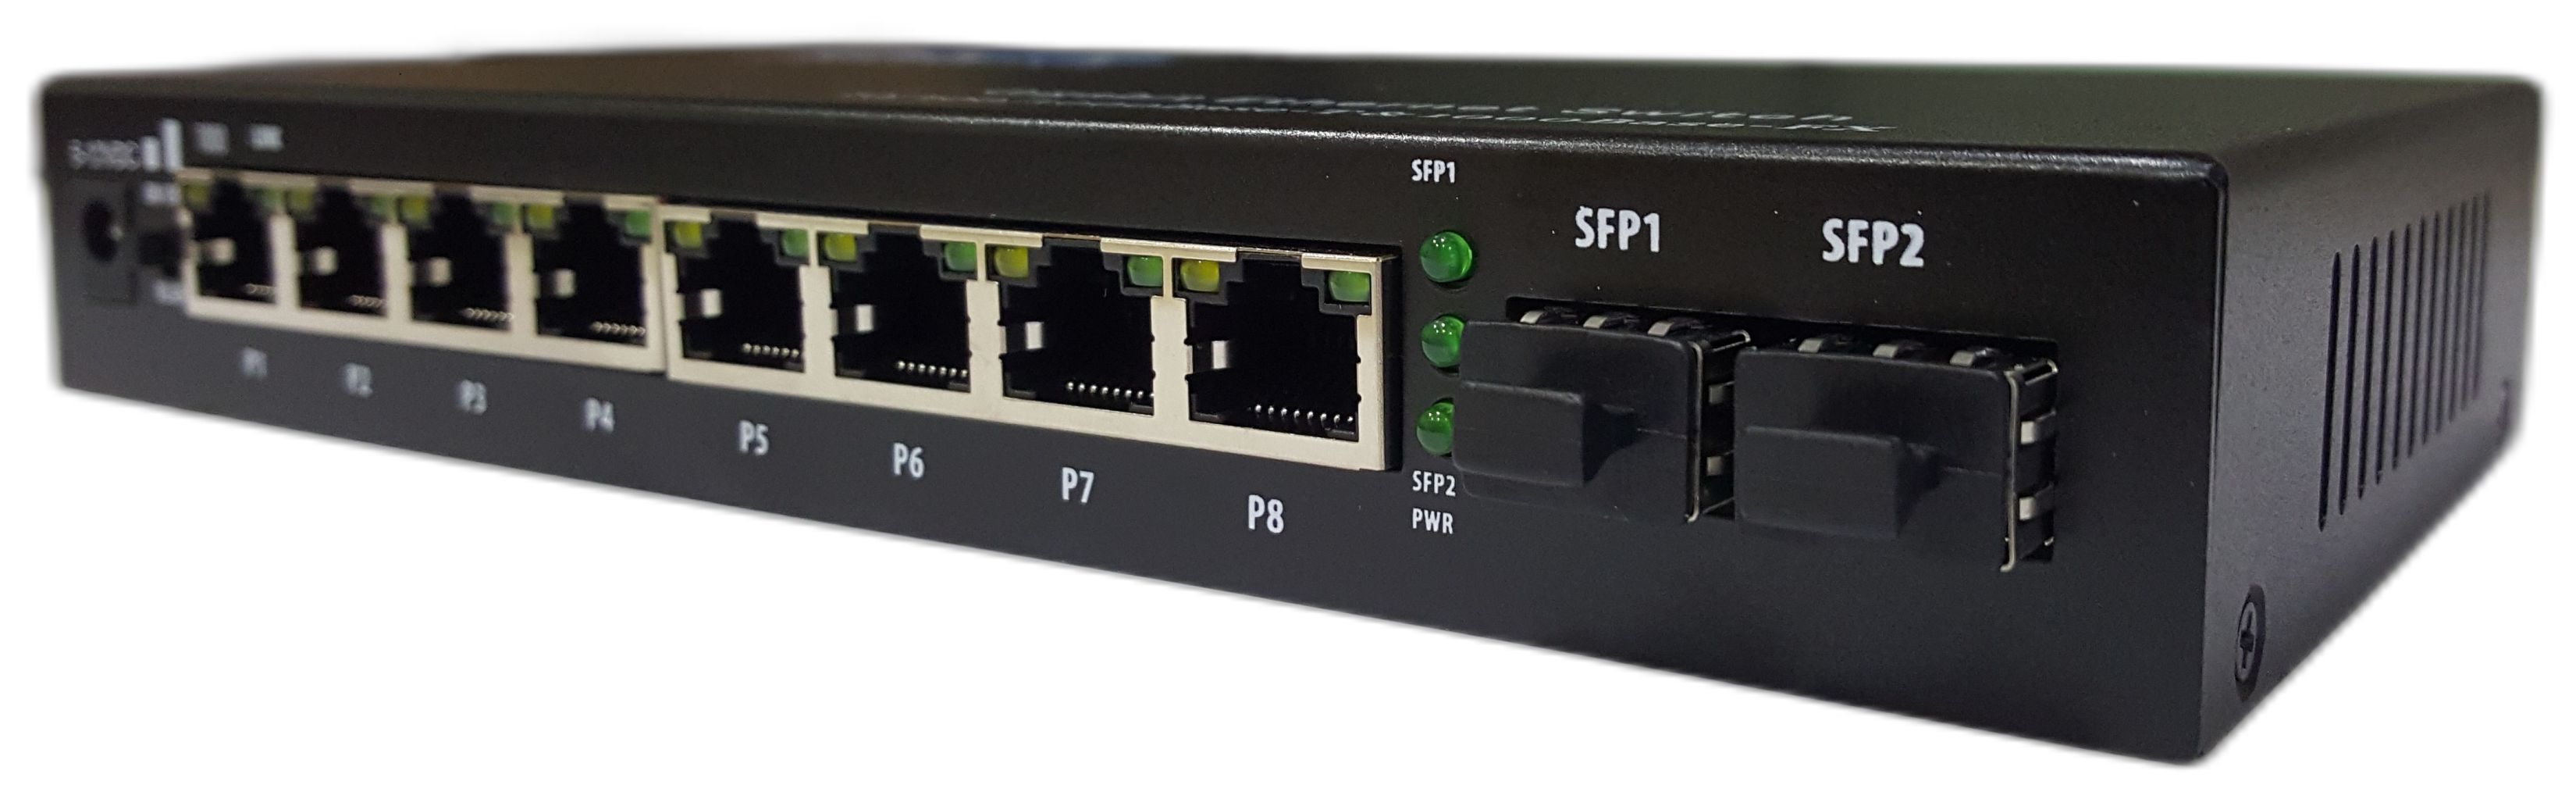 CLR-SWG-1510C-8-port-rj45-2-sfp-ethernet-switch-4